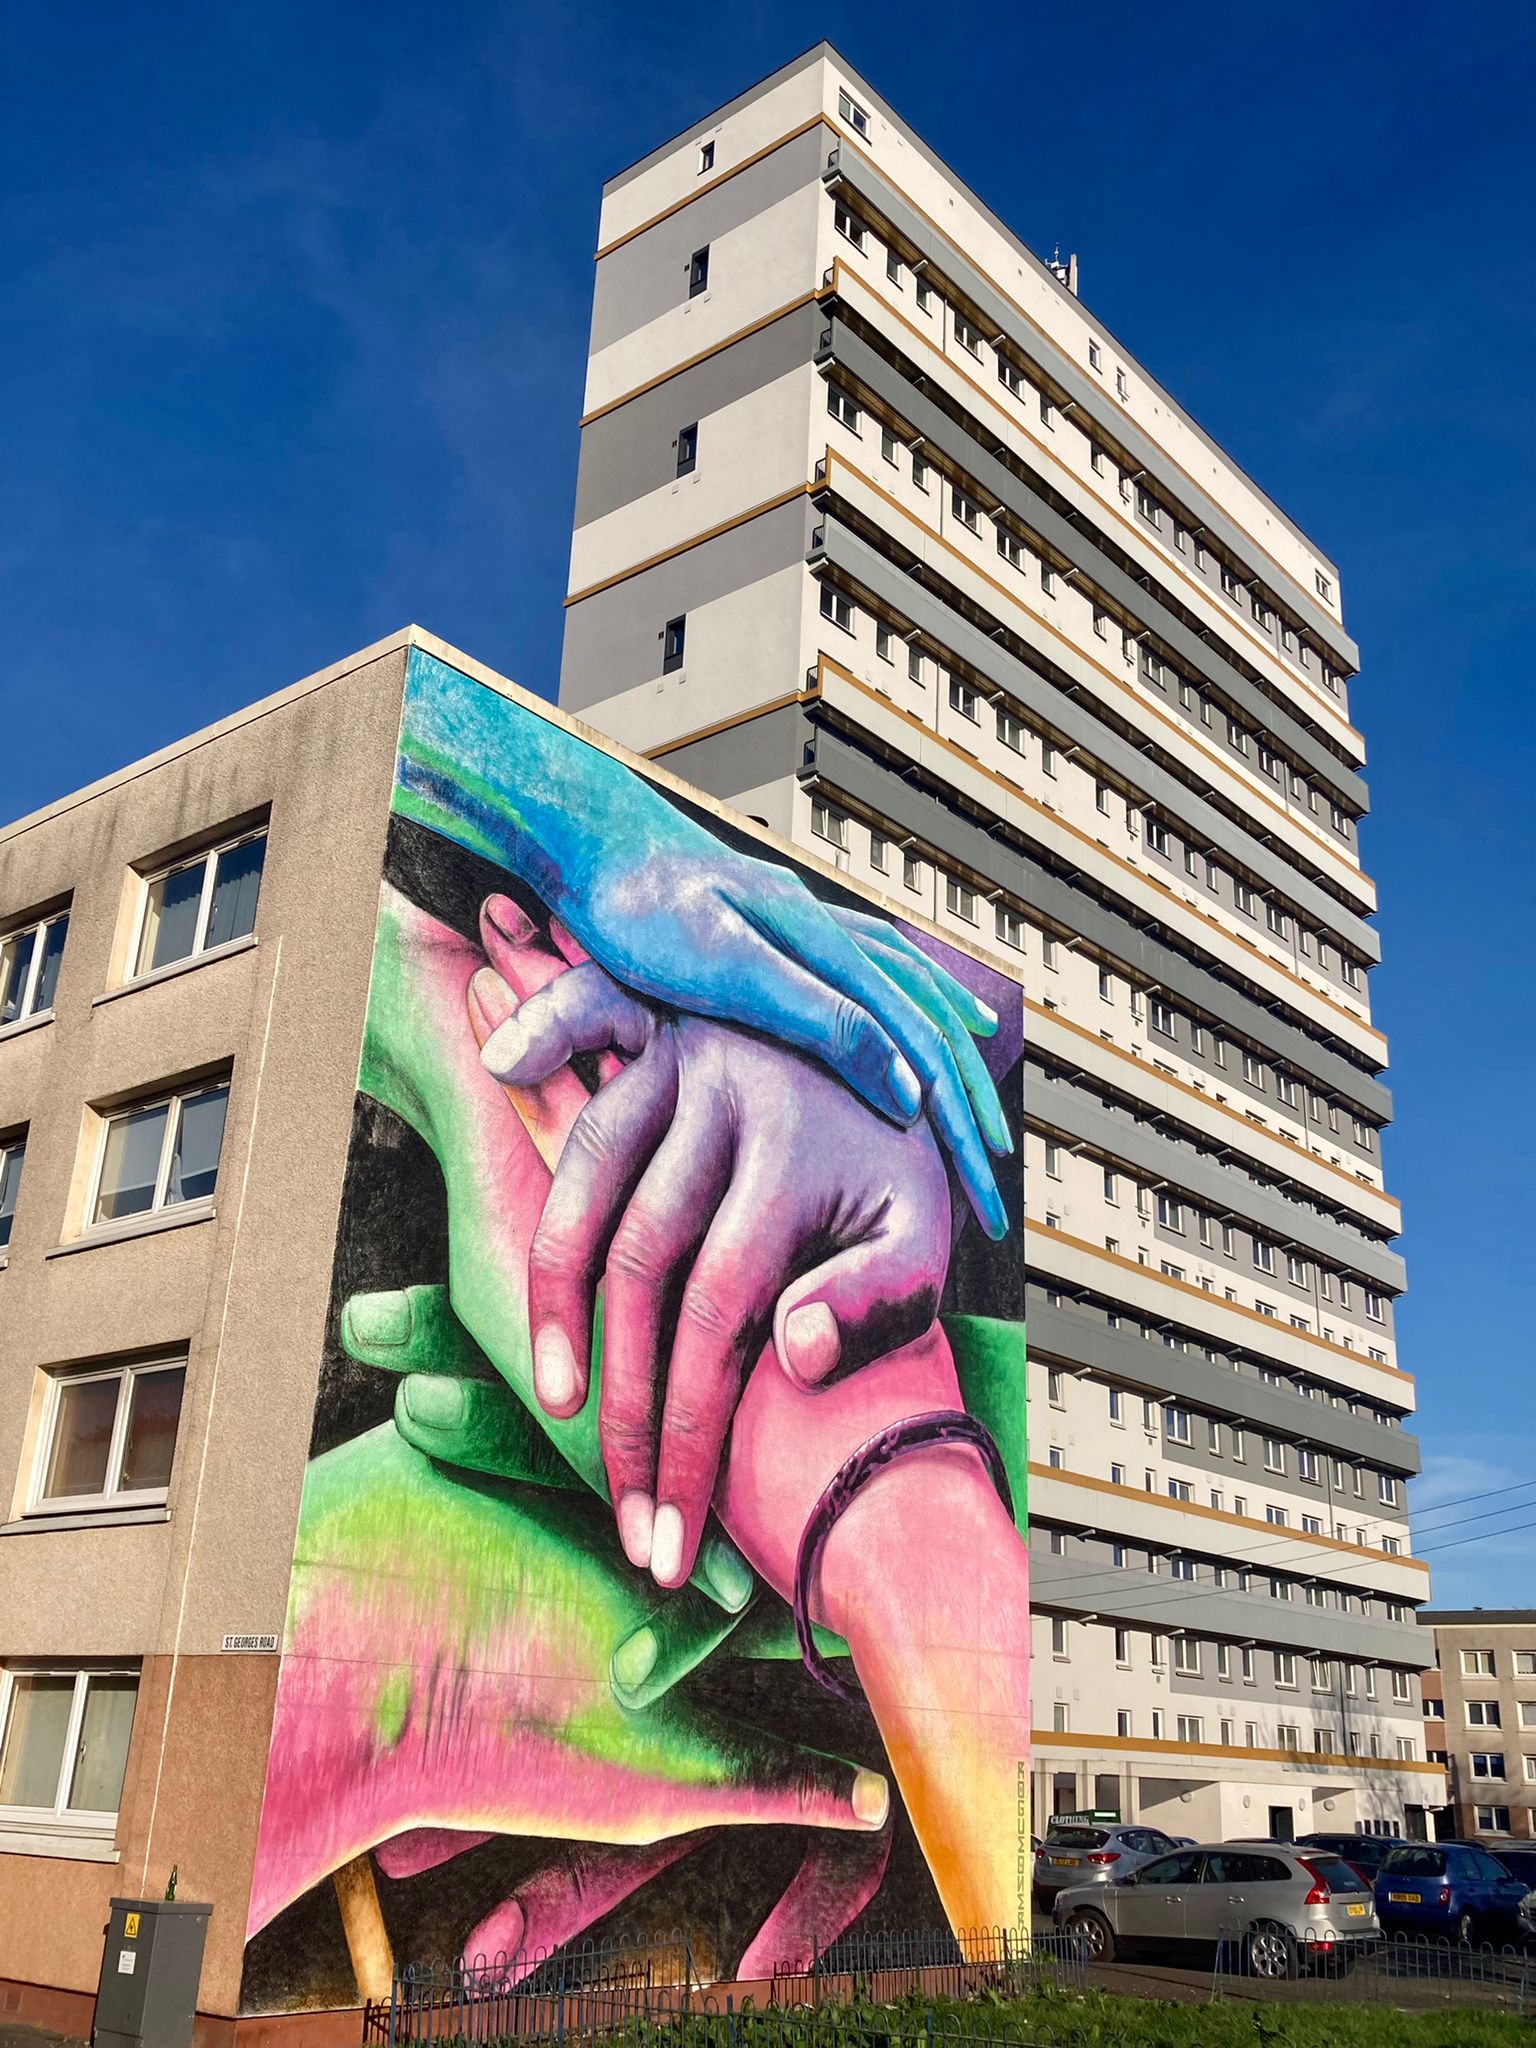 Queens Cross Housing Association unveils new mural in Glasgow